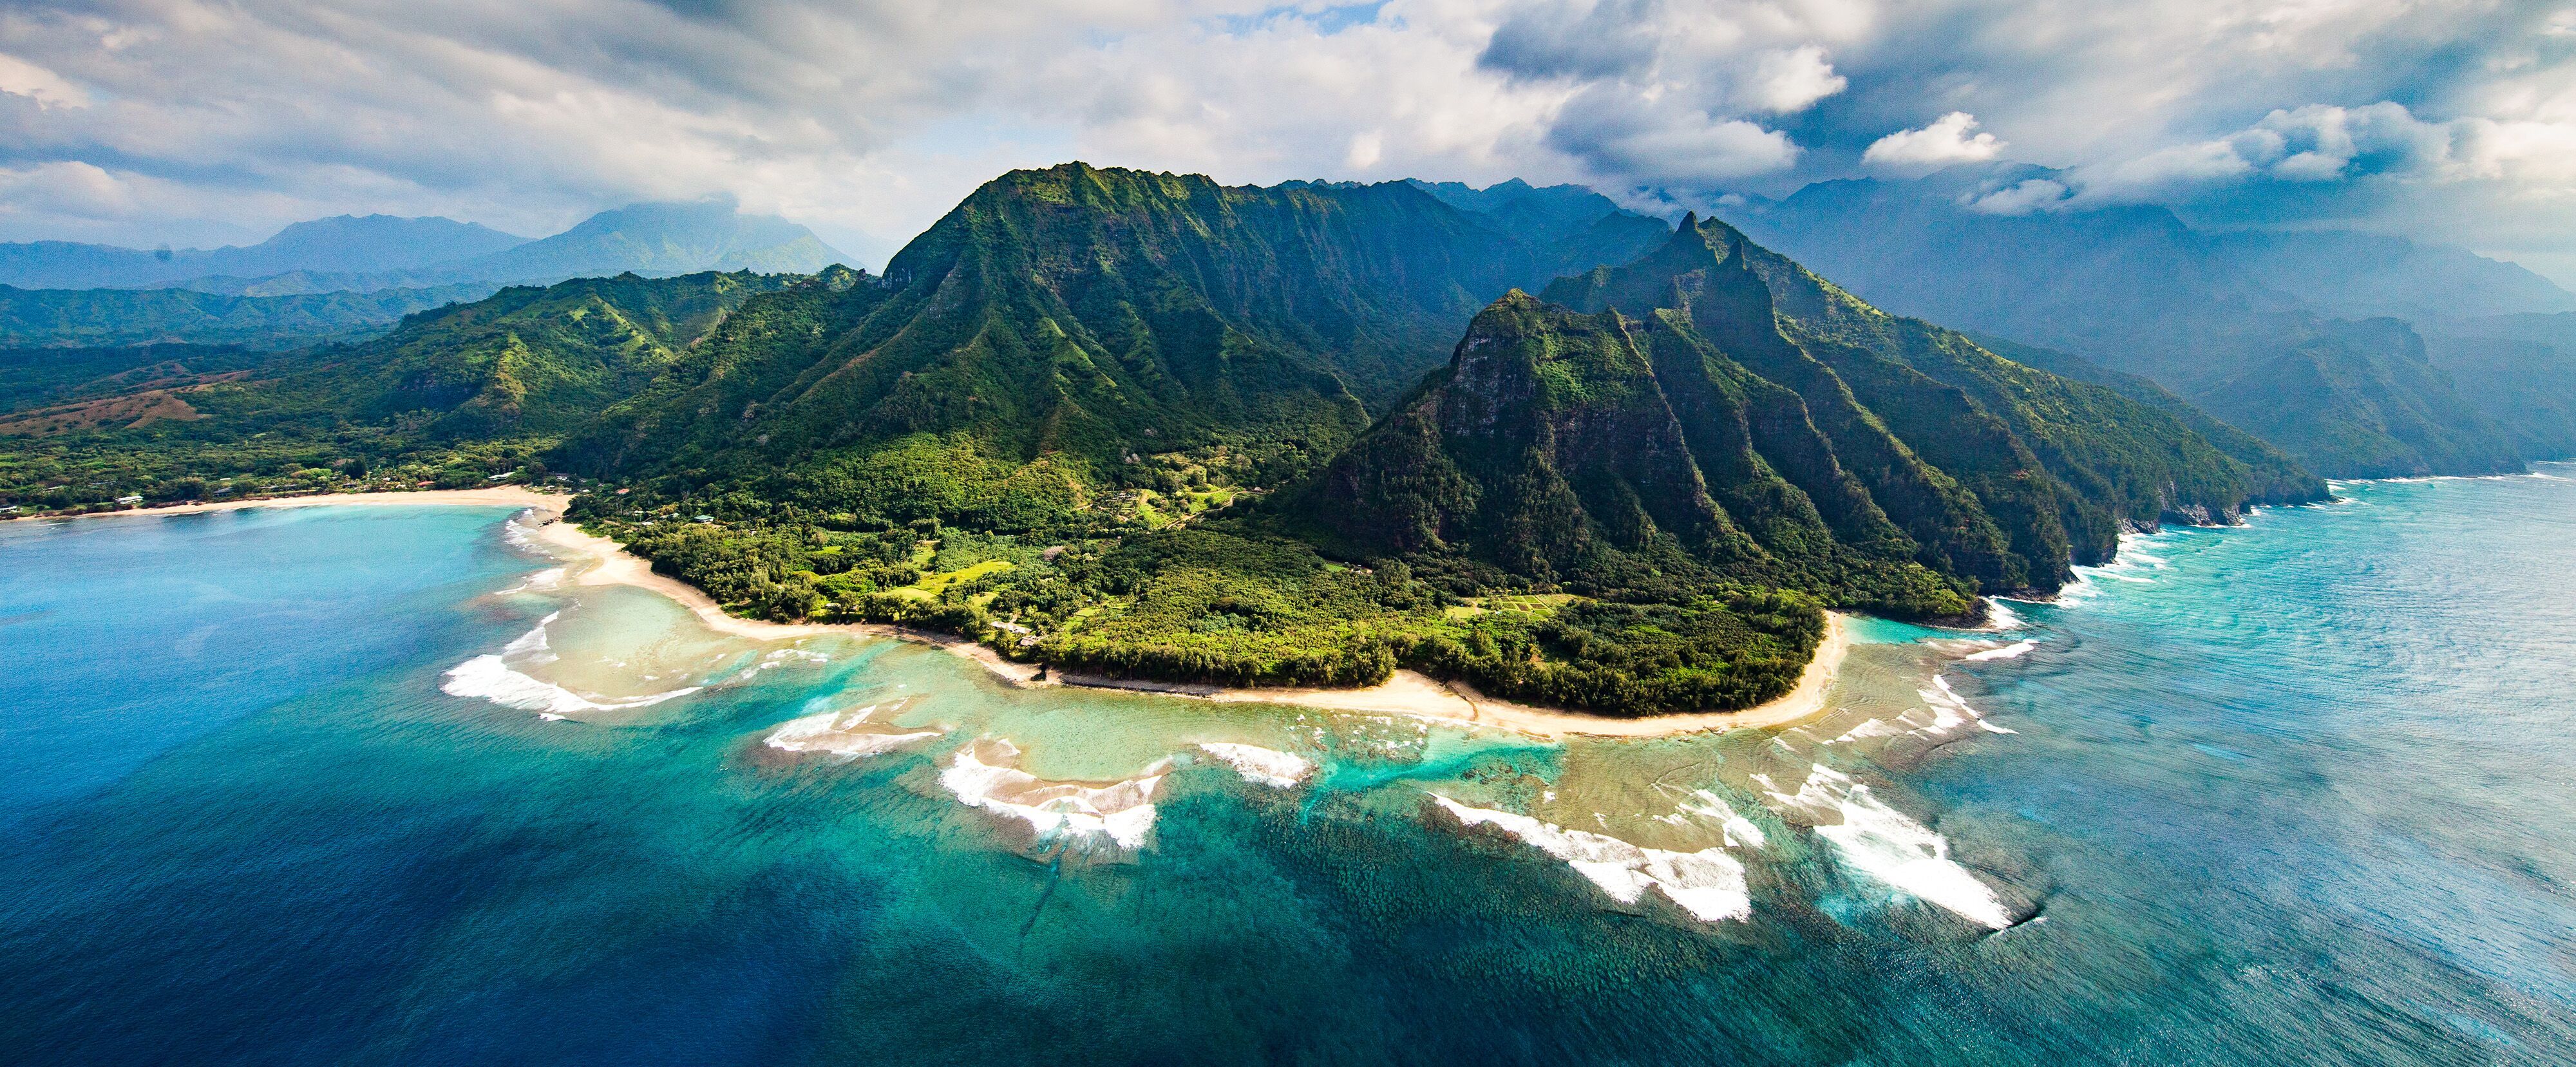 Blick auf die atemberaubende Na Pali Coast auf Kauai, Hawaii